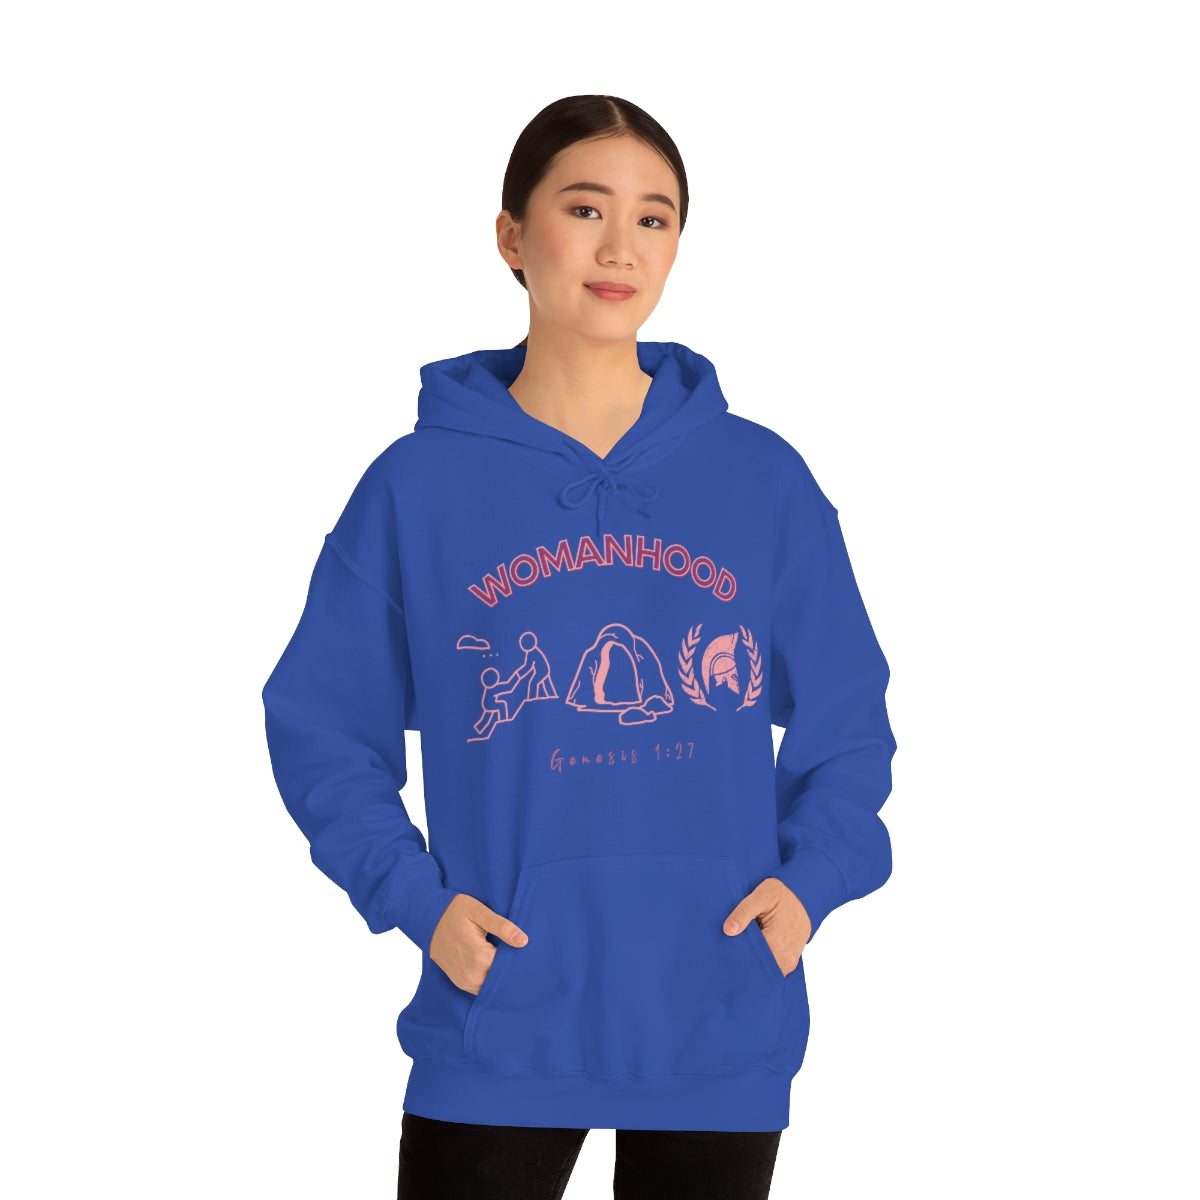 Womanhood Hooded Sweatshirt